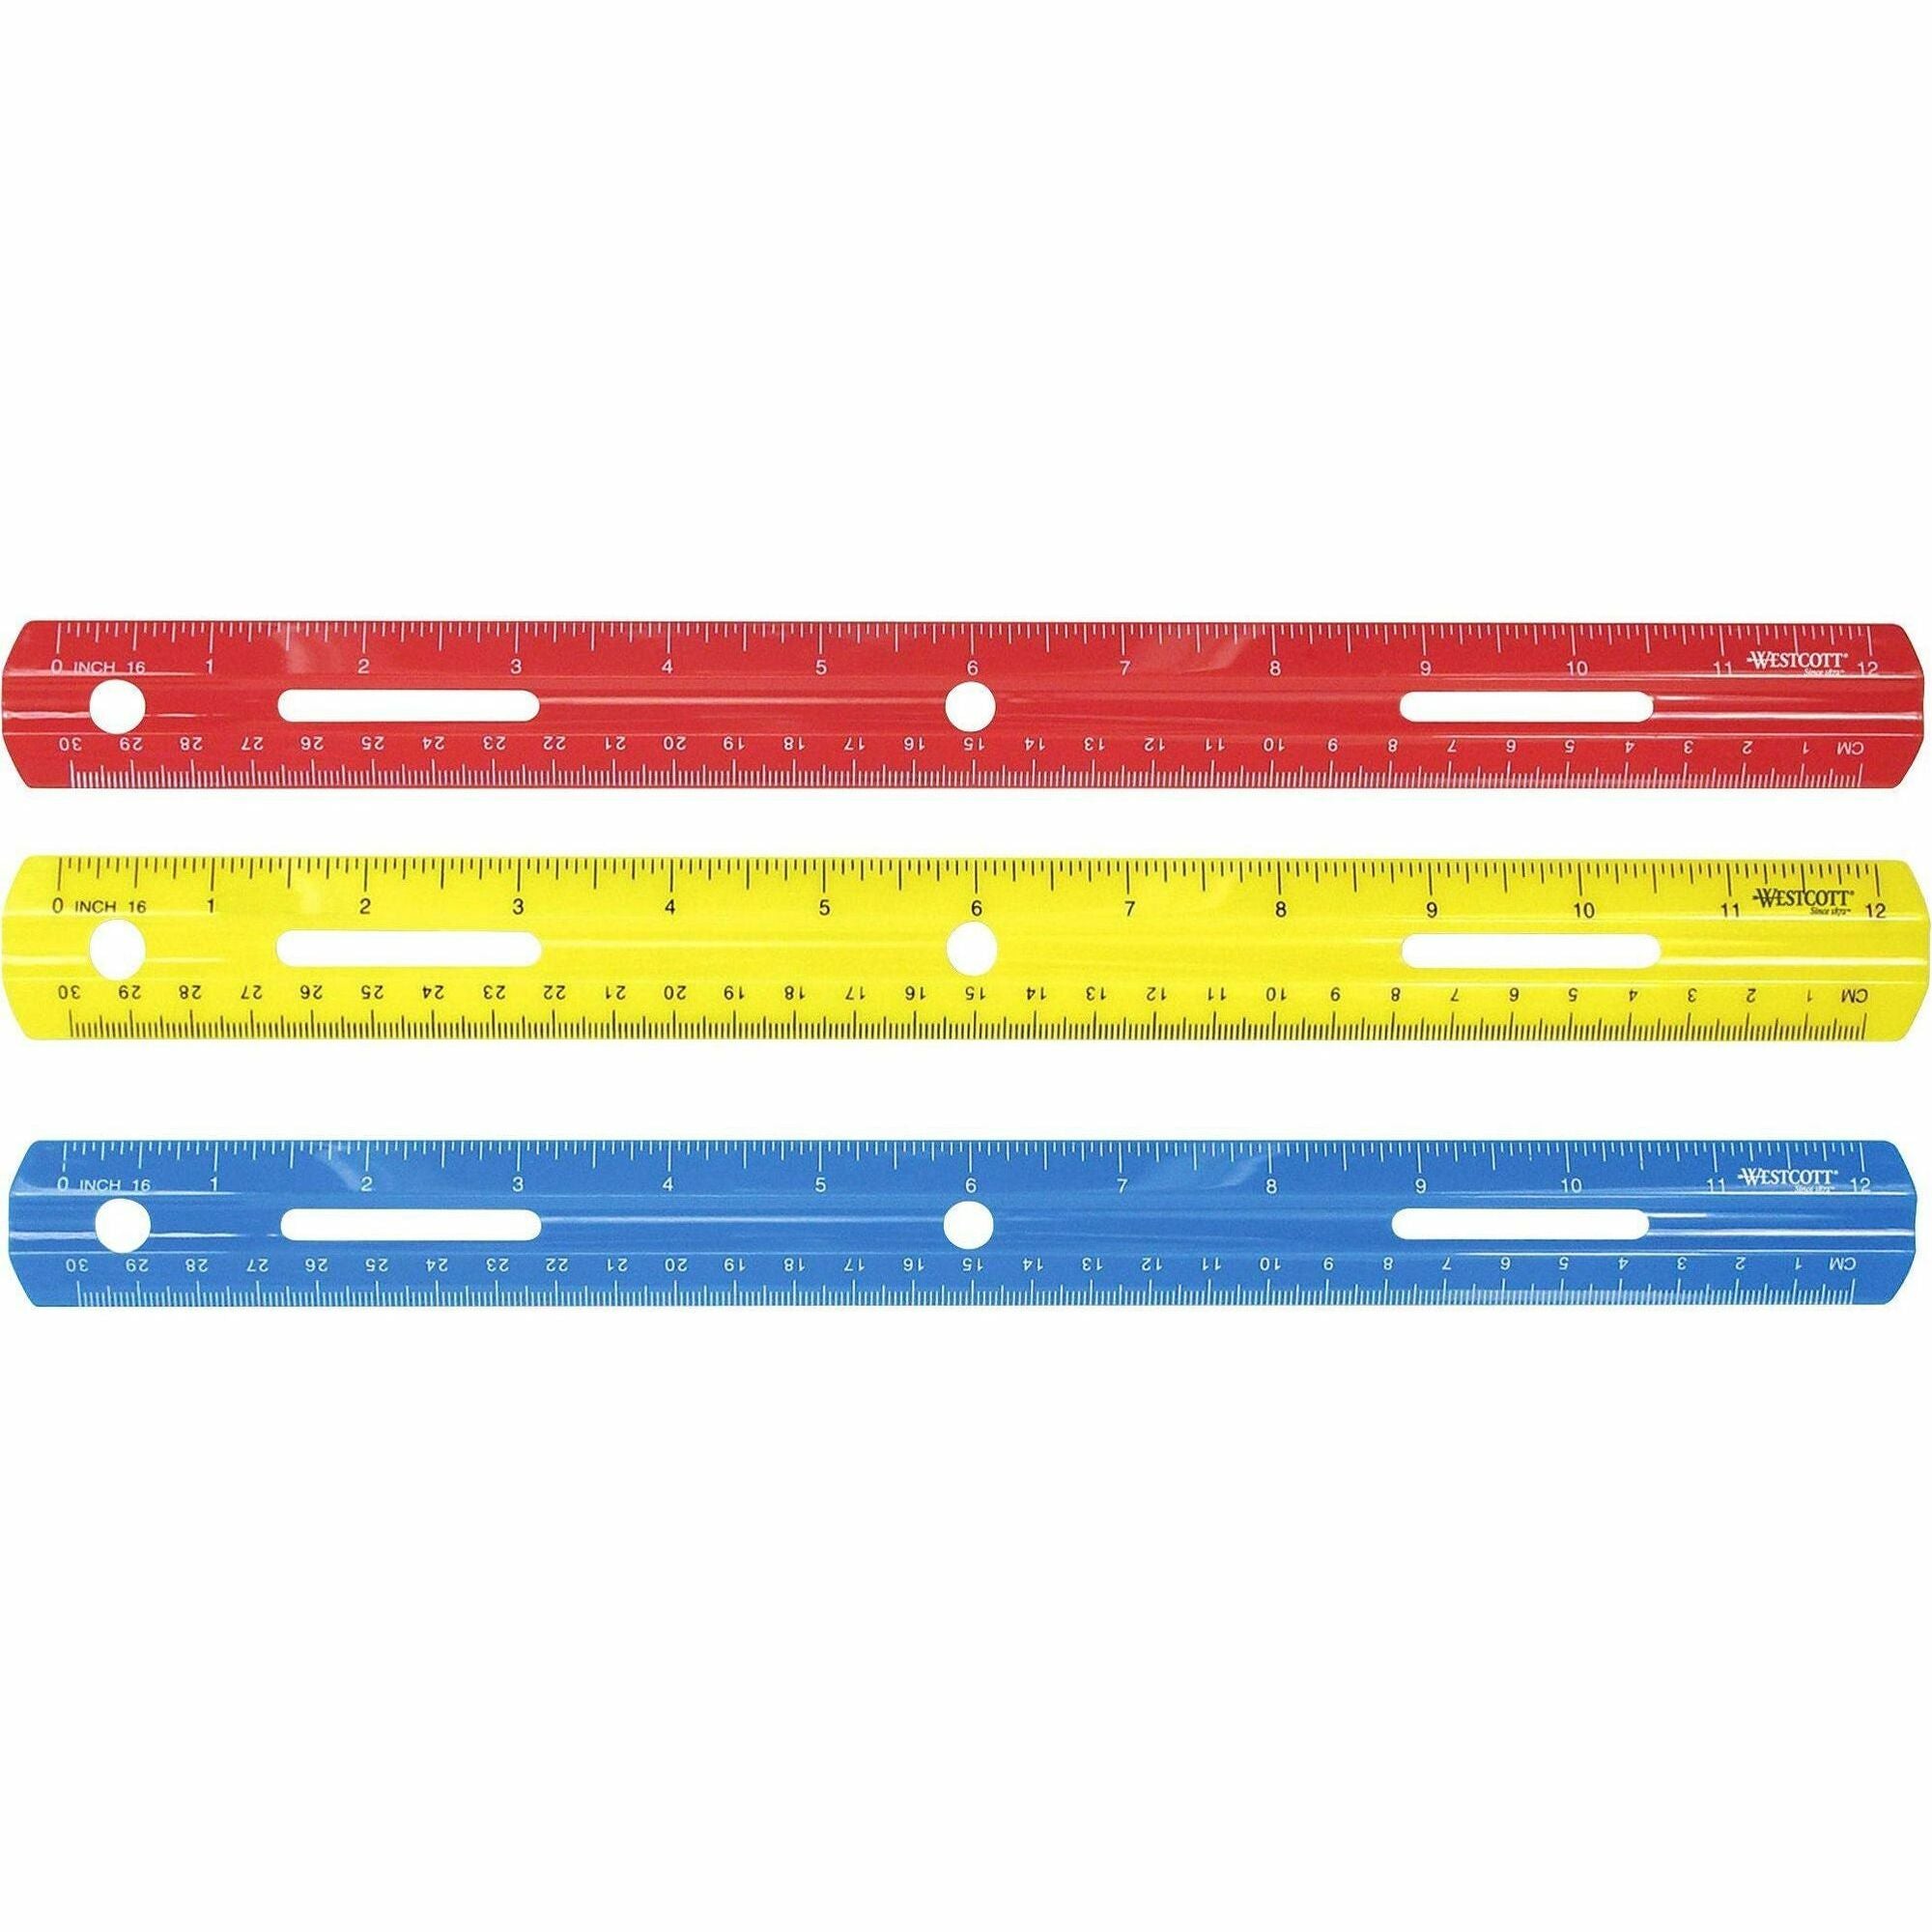 westcott-12-plastic-ruler-12-length-1-16-graduations-imperial-metric-measuring-system-plastic-1-each-assorted_acm10526 - 1